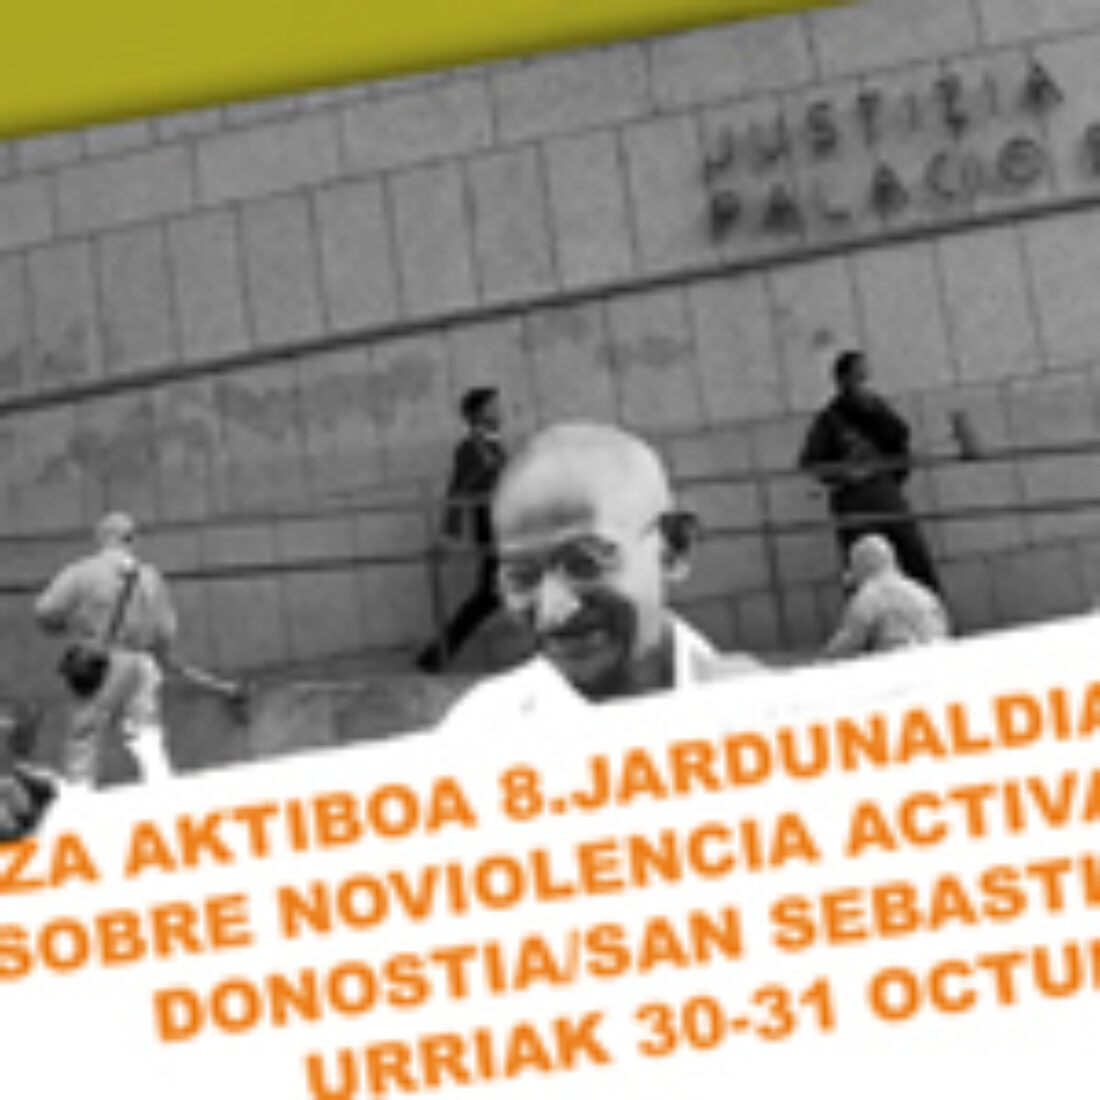 30-31 octubre, Donostia : 8. Jornadas sobre noviolencia activa